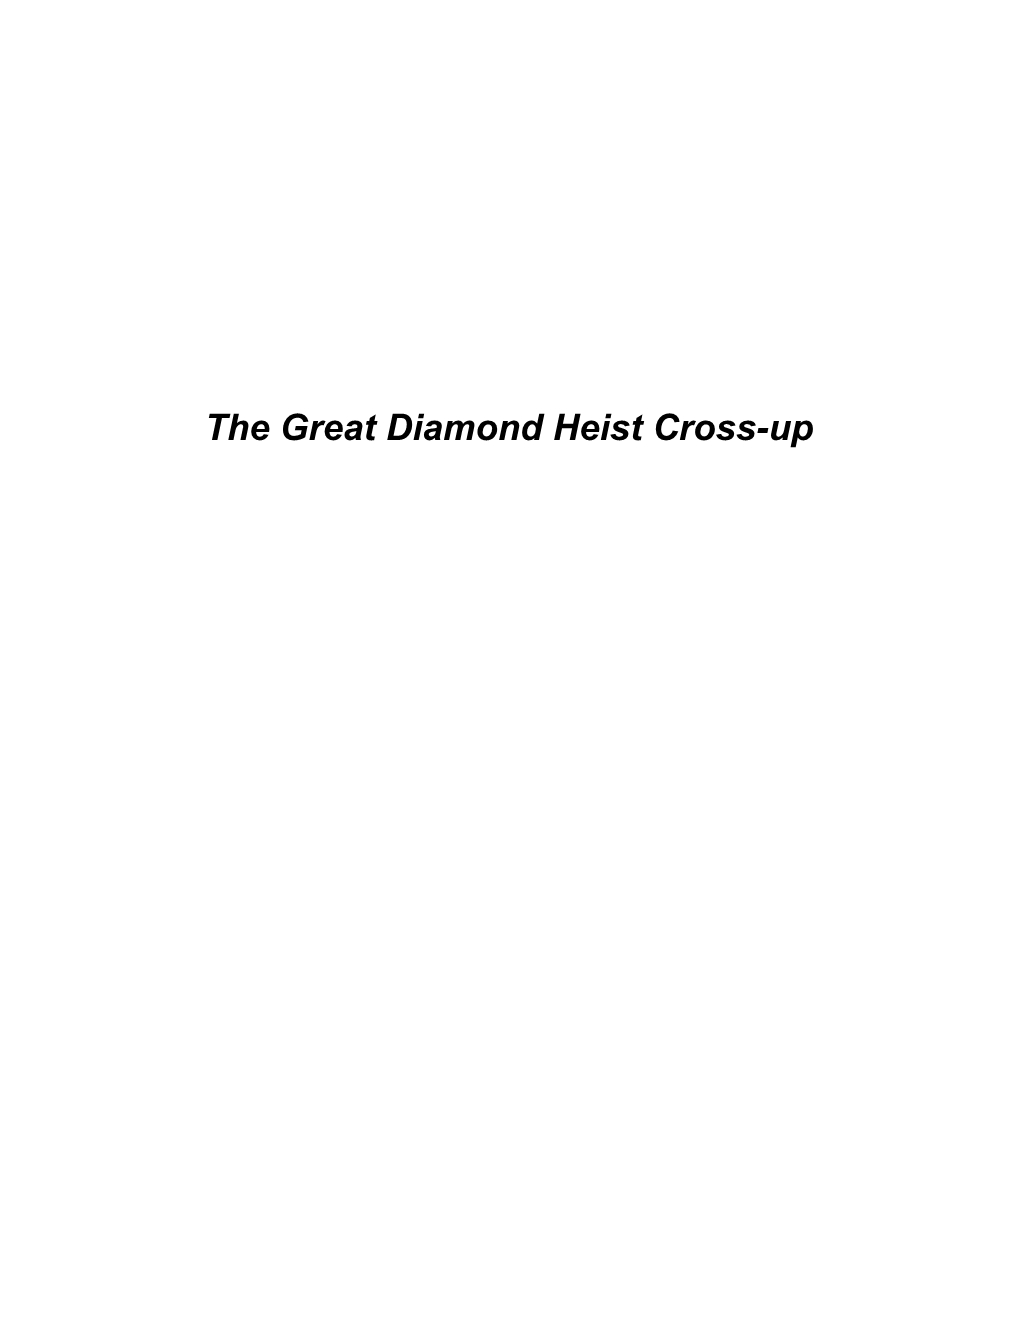 The Great Diamond Heist Cross-Up